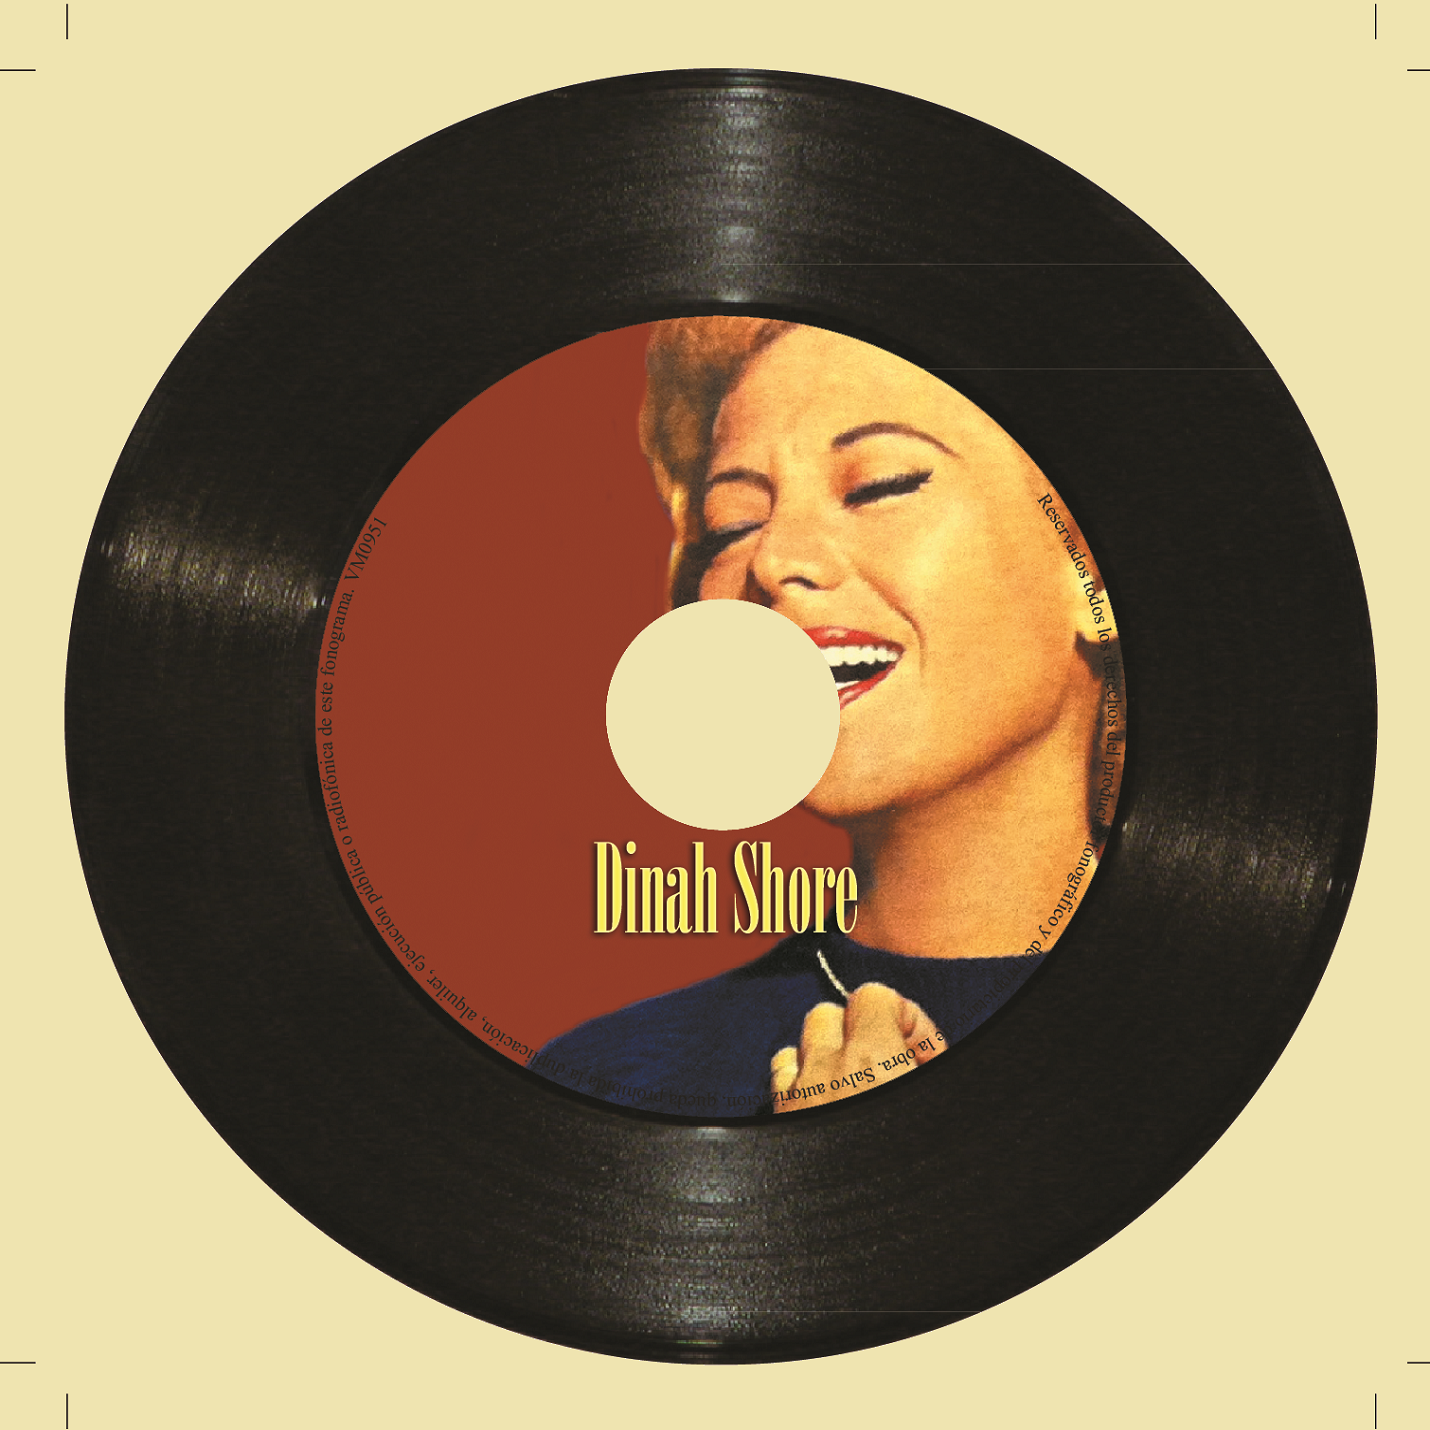 Dinah Shore (Colección Vintage Music)